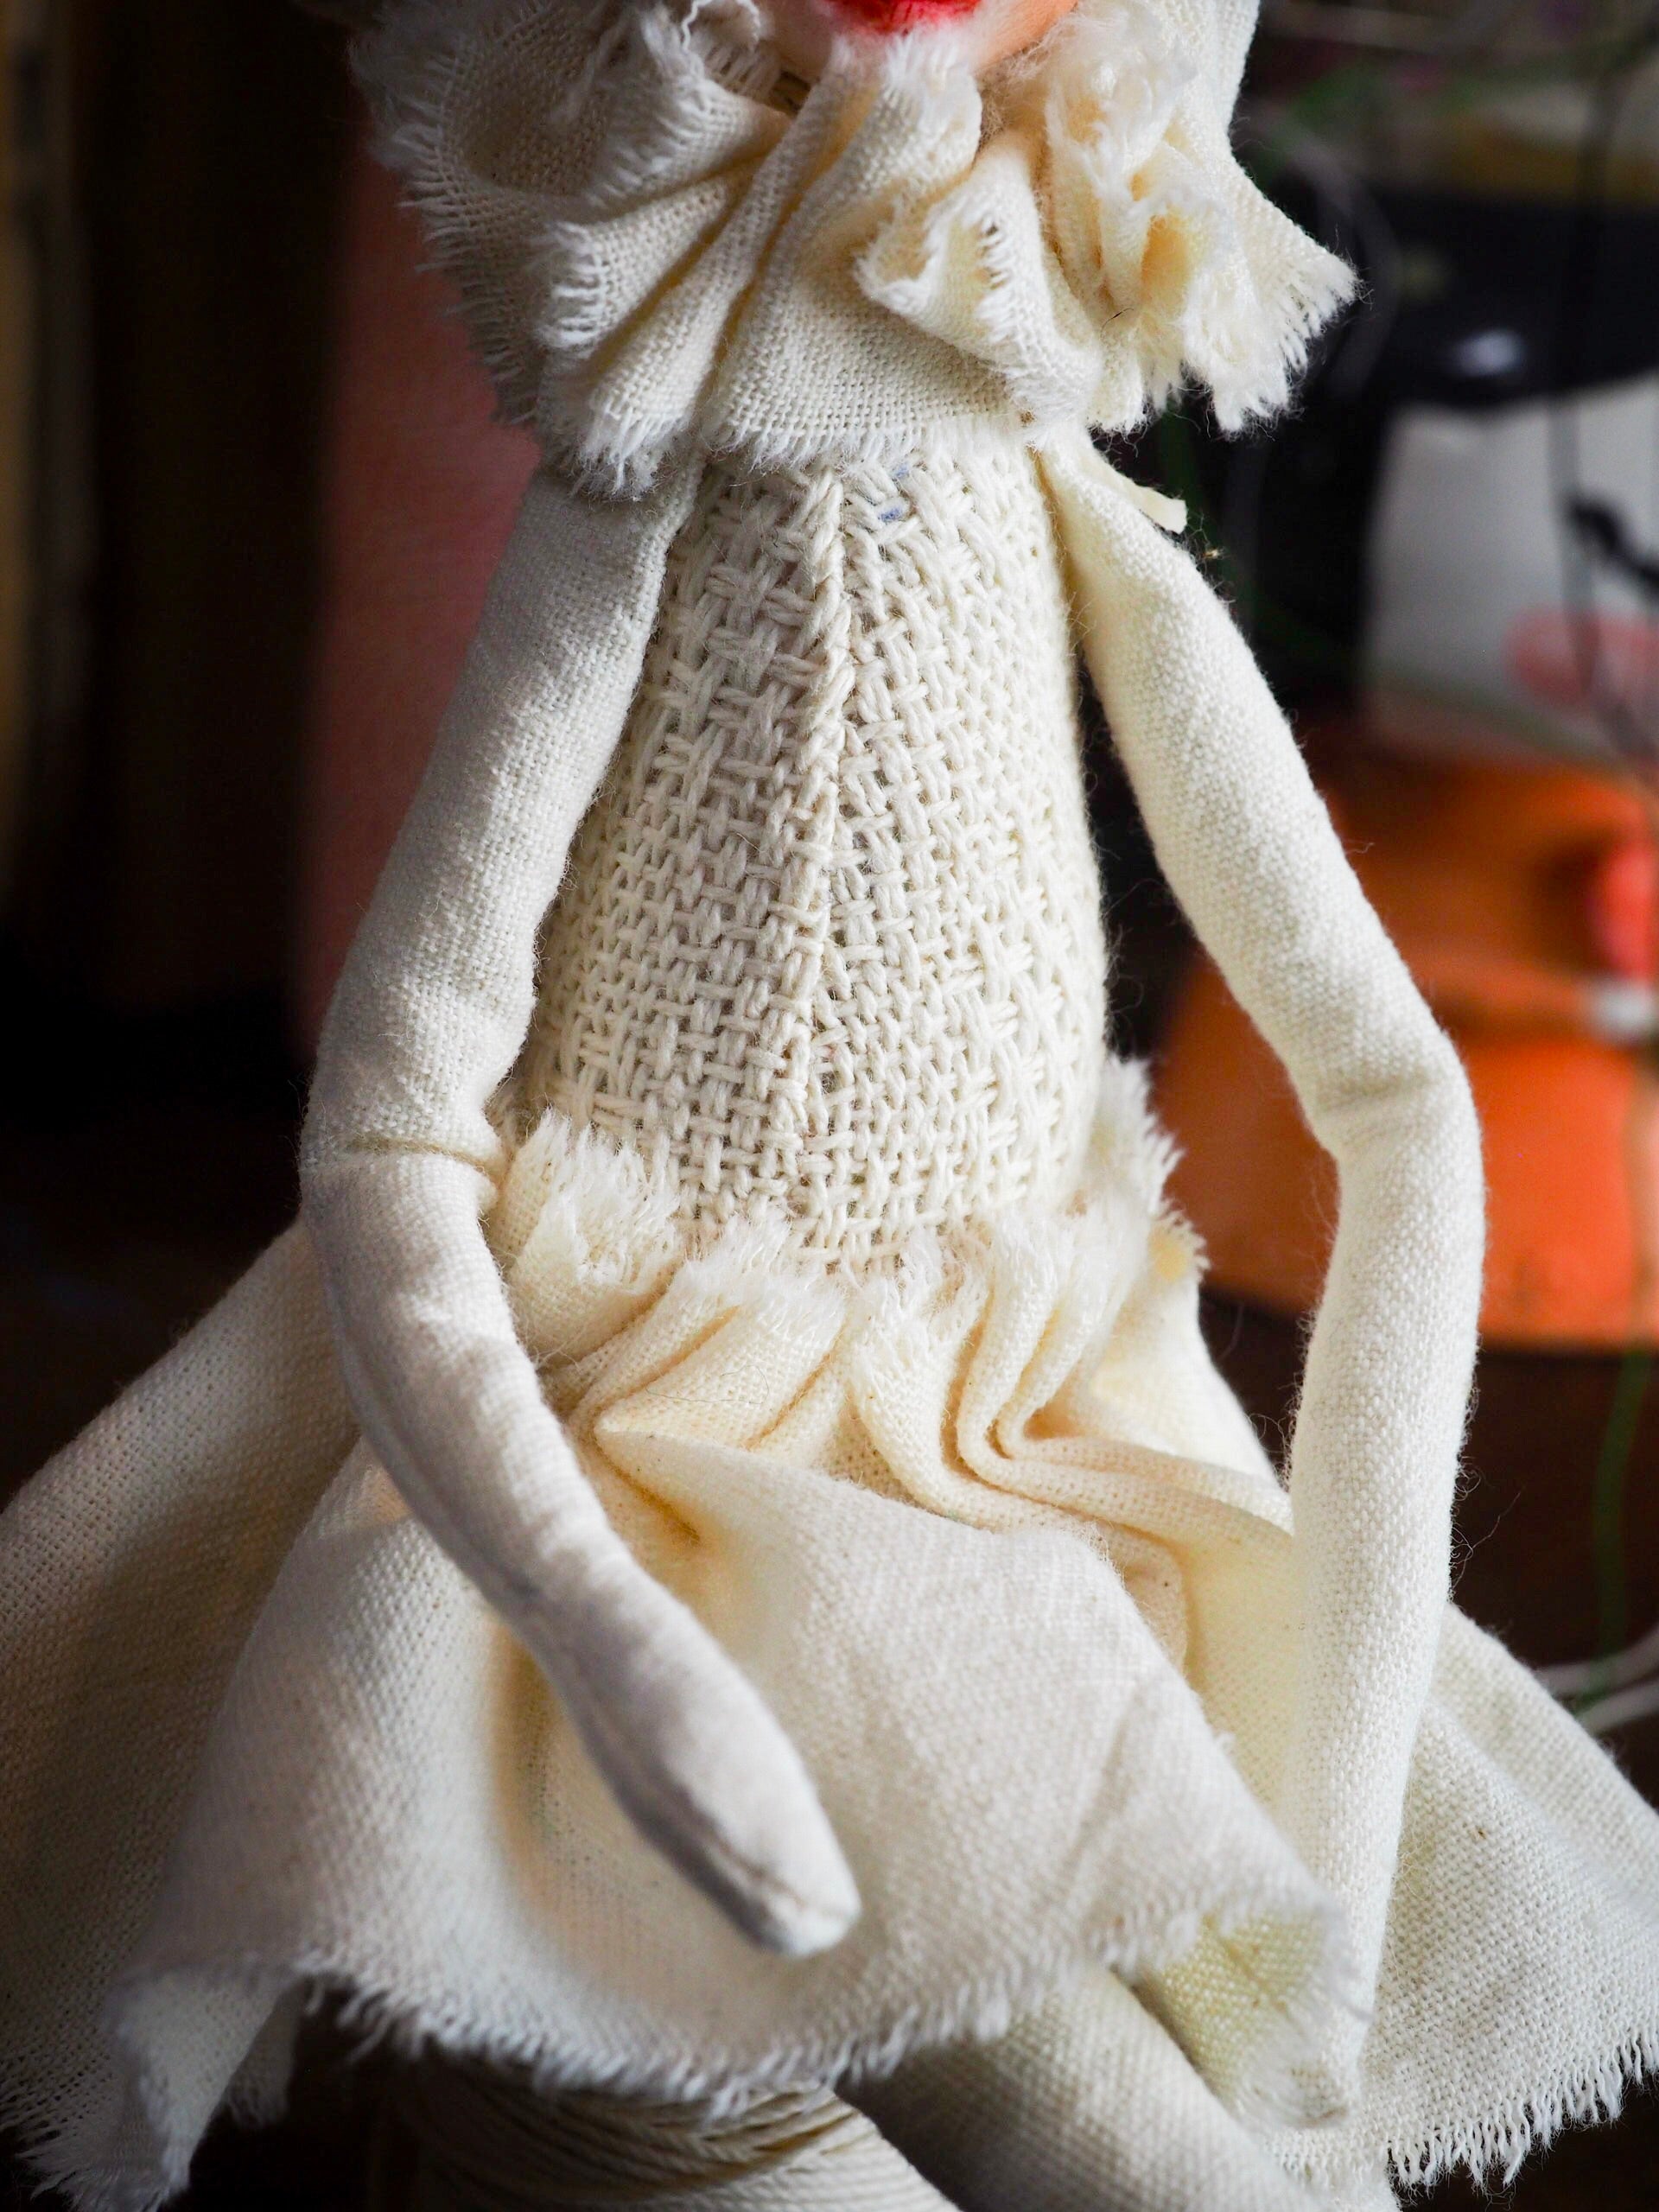 MUSHROOM SPECIMEN N. 6 - Original woodlands handmade art doll by Danita Art, Art Doll by Danita Art